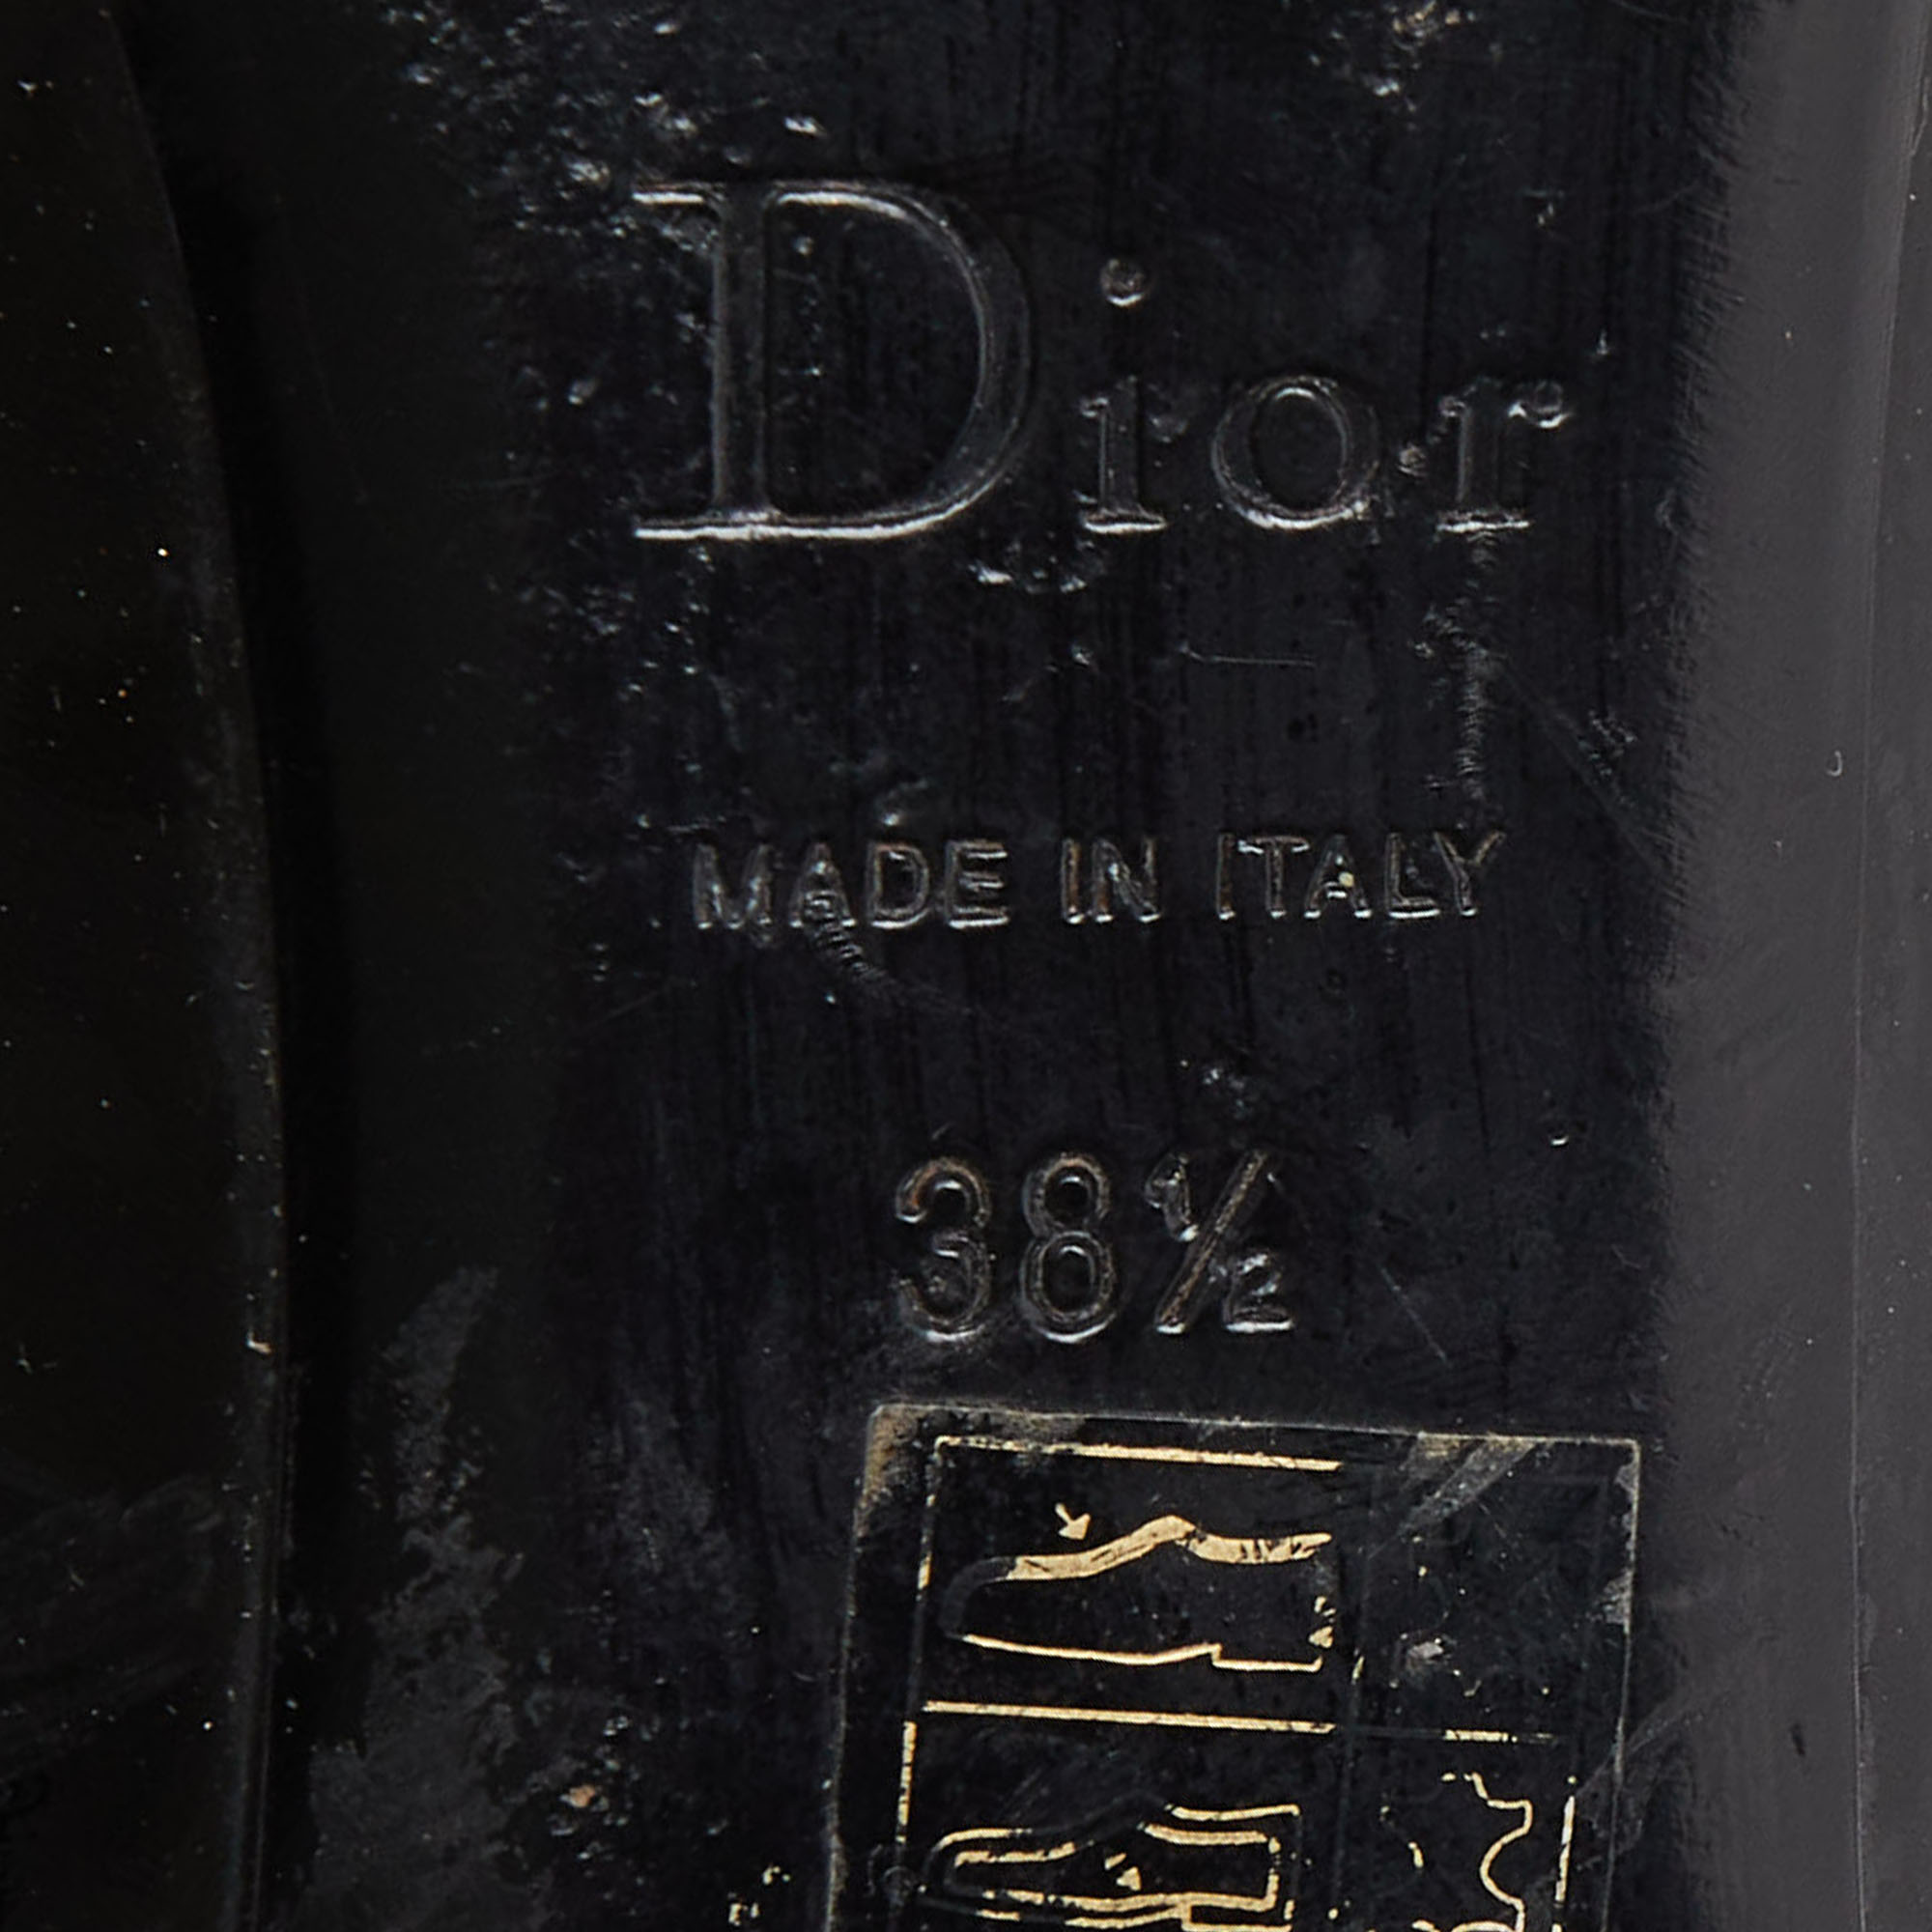 Dior Black Patent Leather Logo Ballet Flats Size 38.5